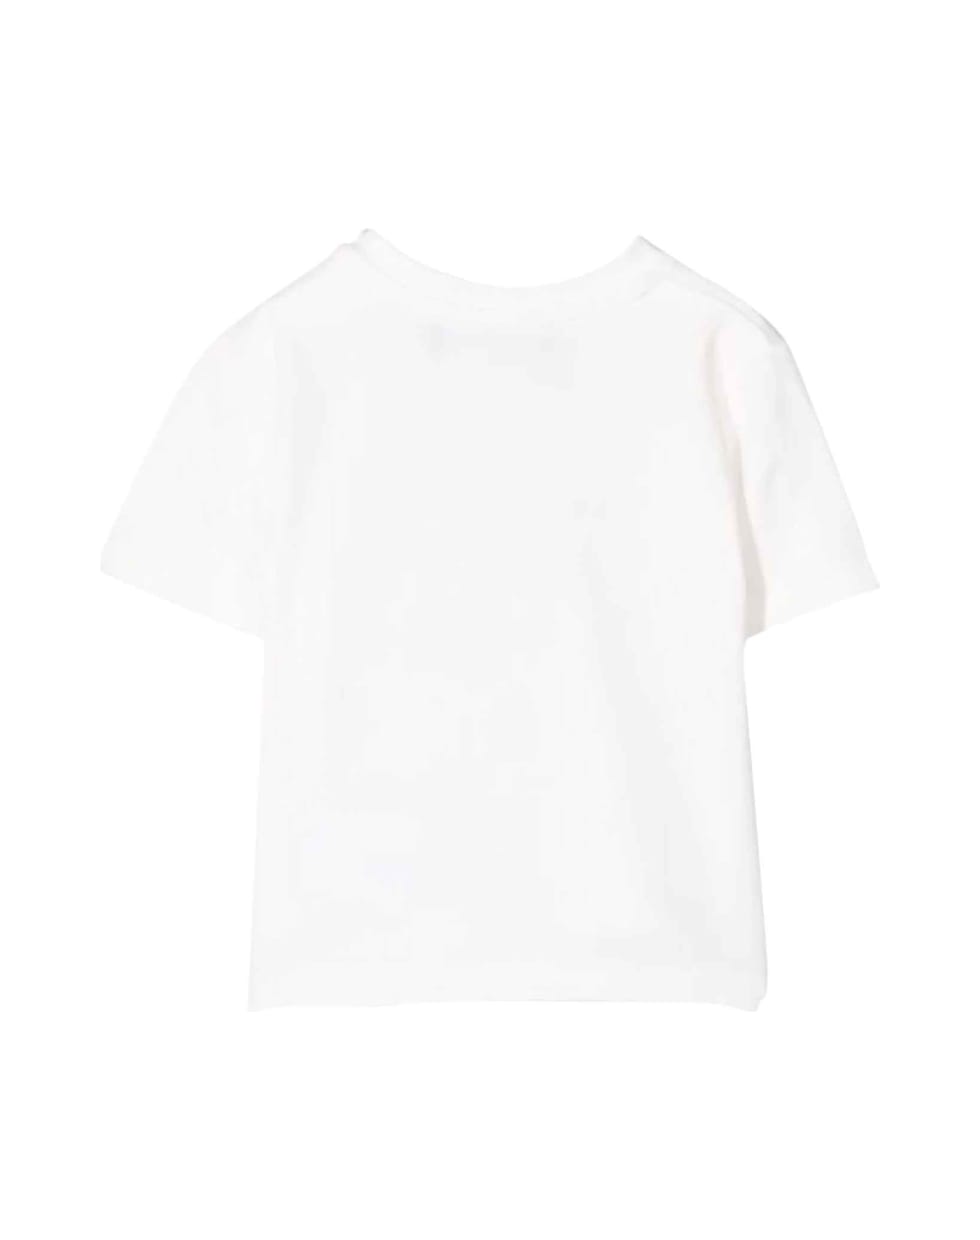 Versace Young Newborn White T-shirt - Bianco e Nero